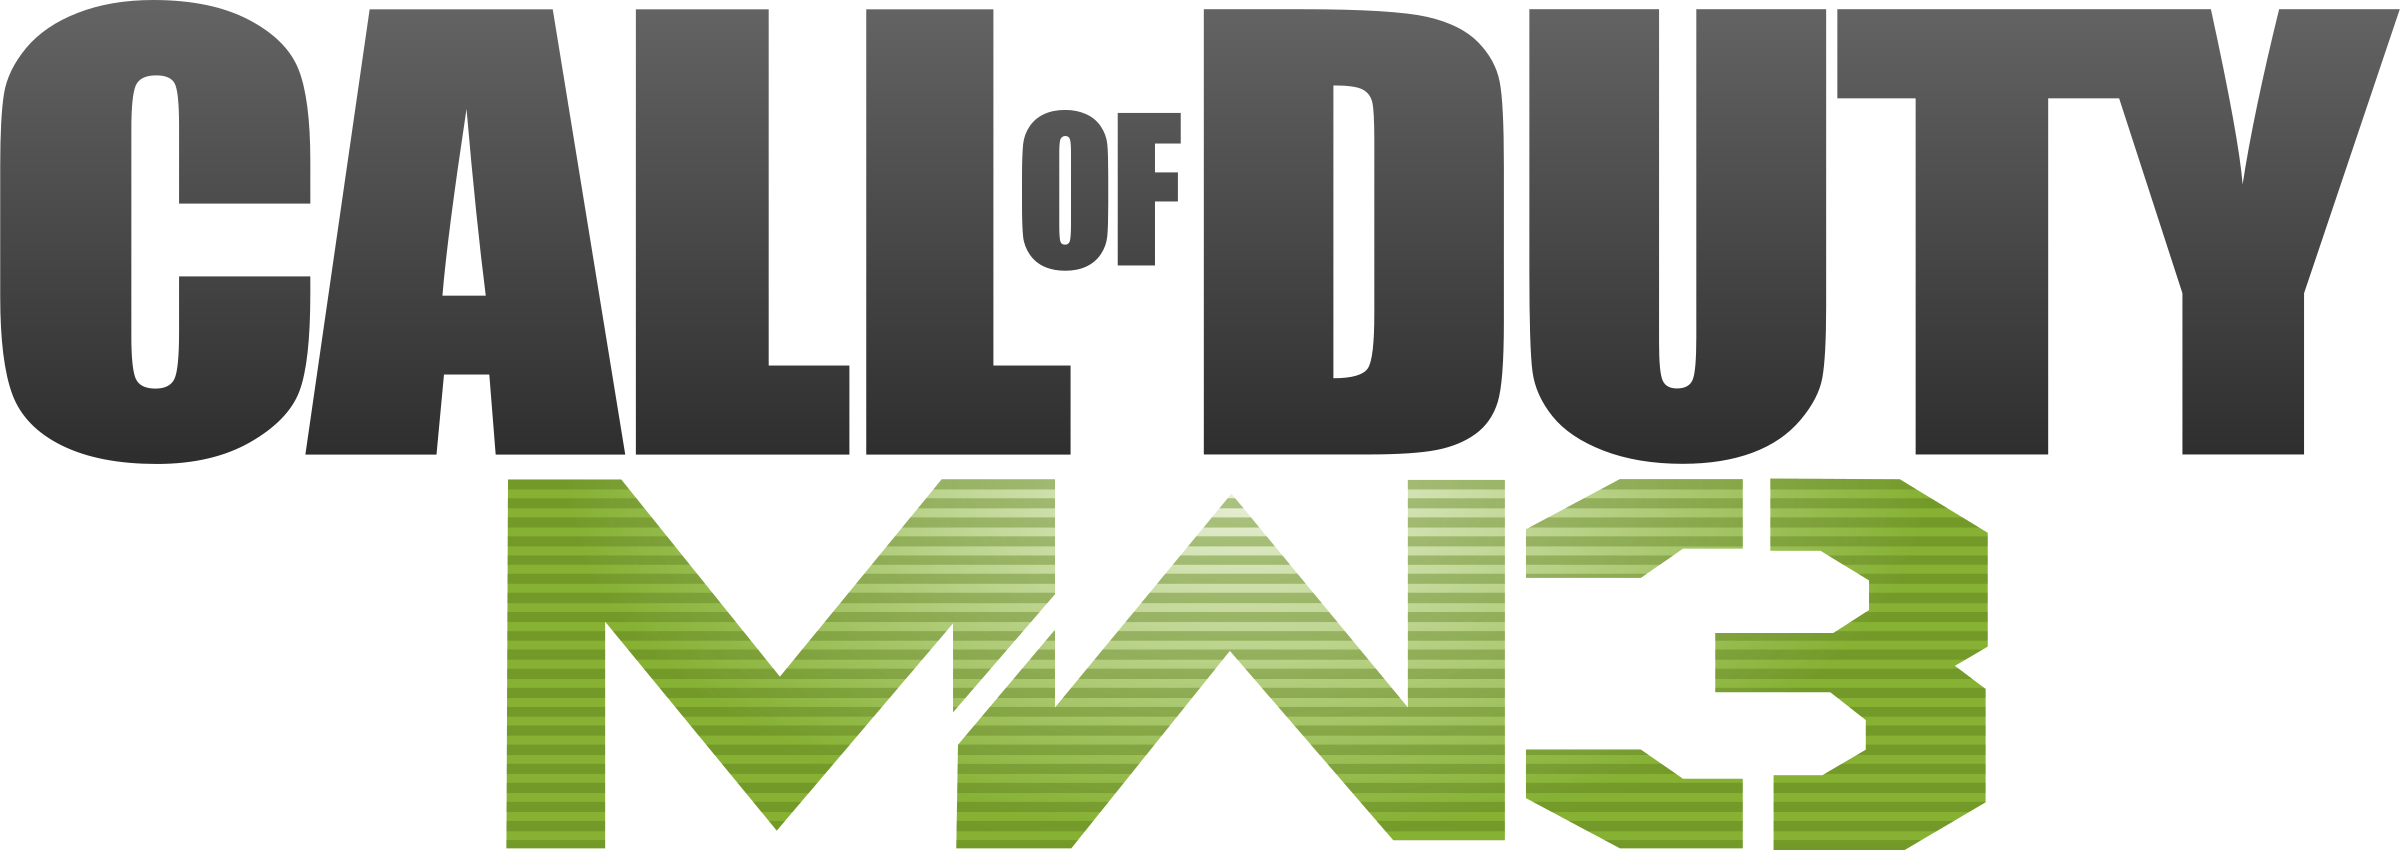 Call of Duty Modern Warfare Logo Transparant Image